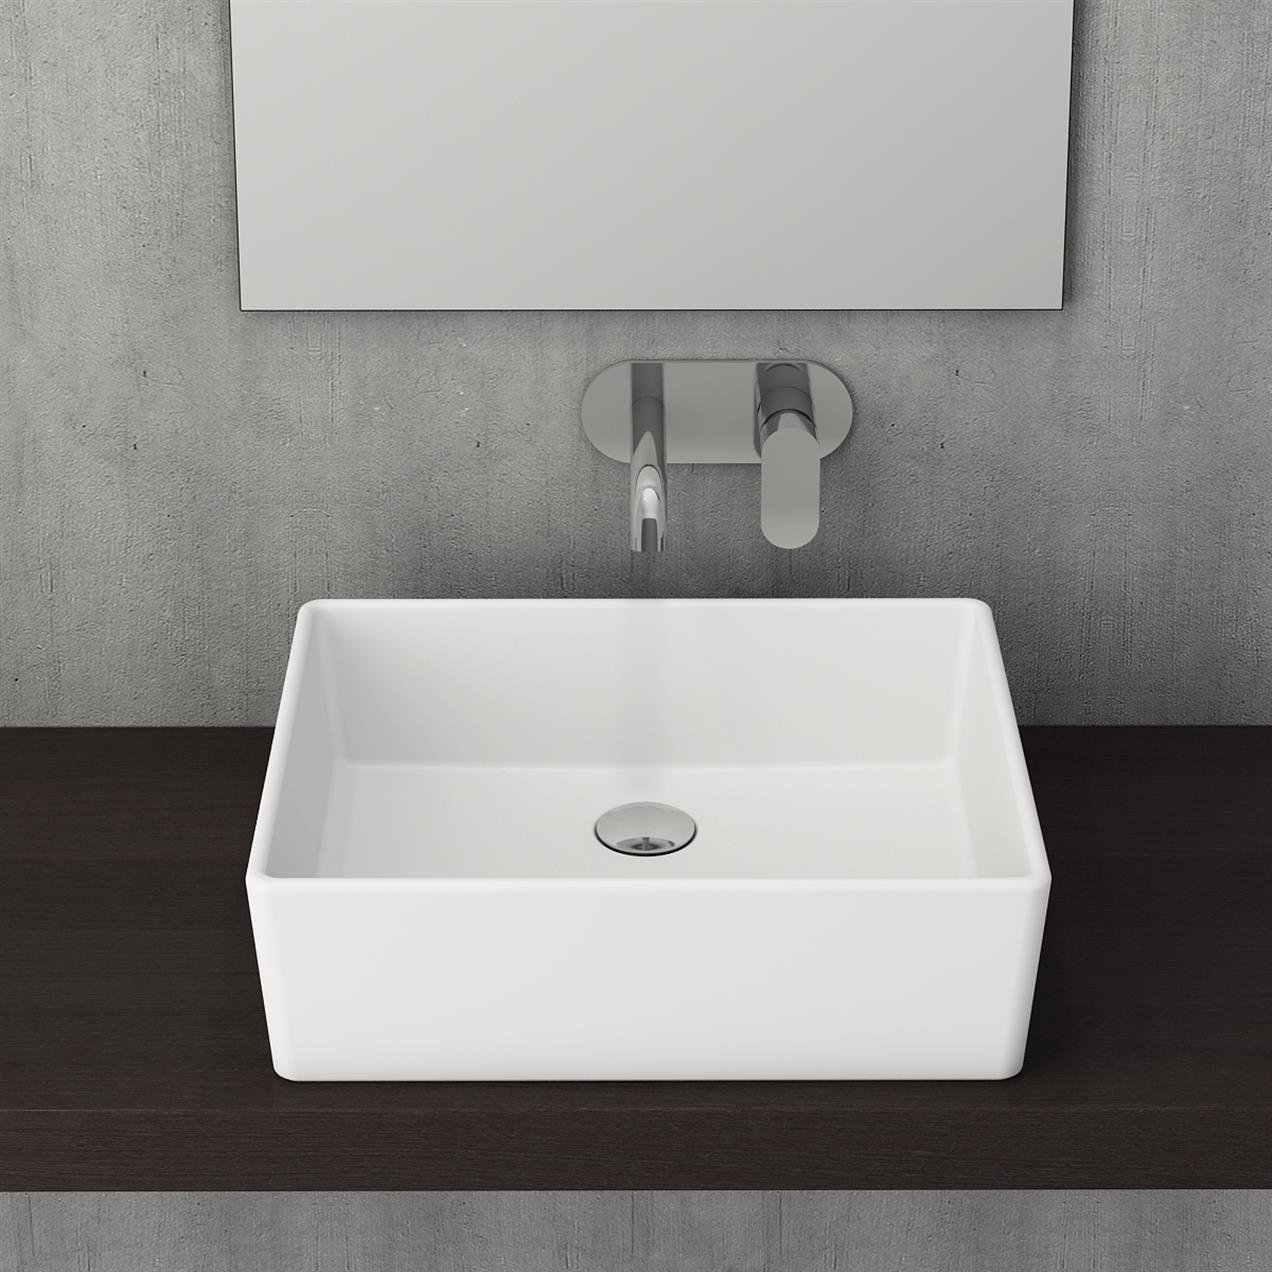 Bocchi Milano 50 cm Parlak Beyaz Banyo ve Tuvalet Çanak Lavabo